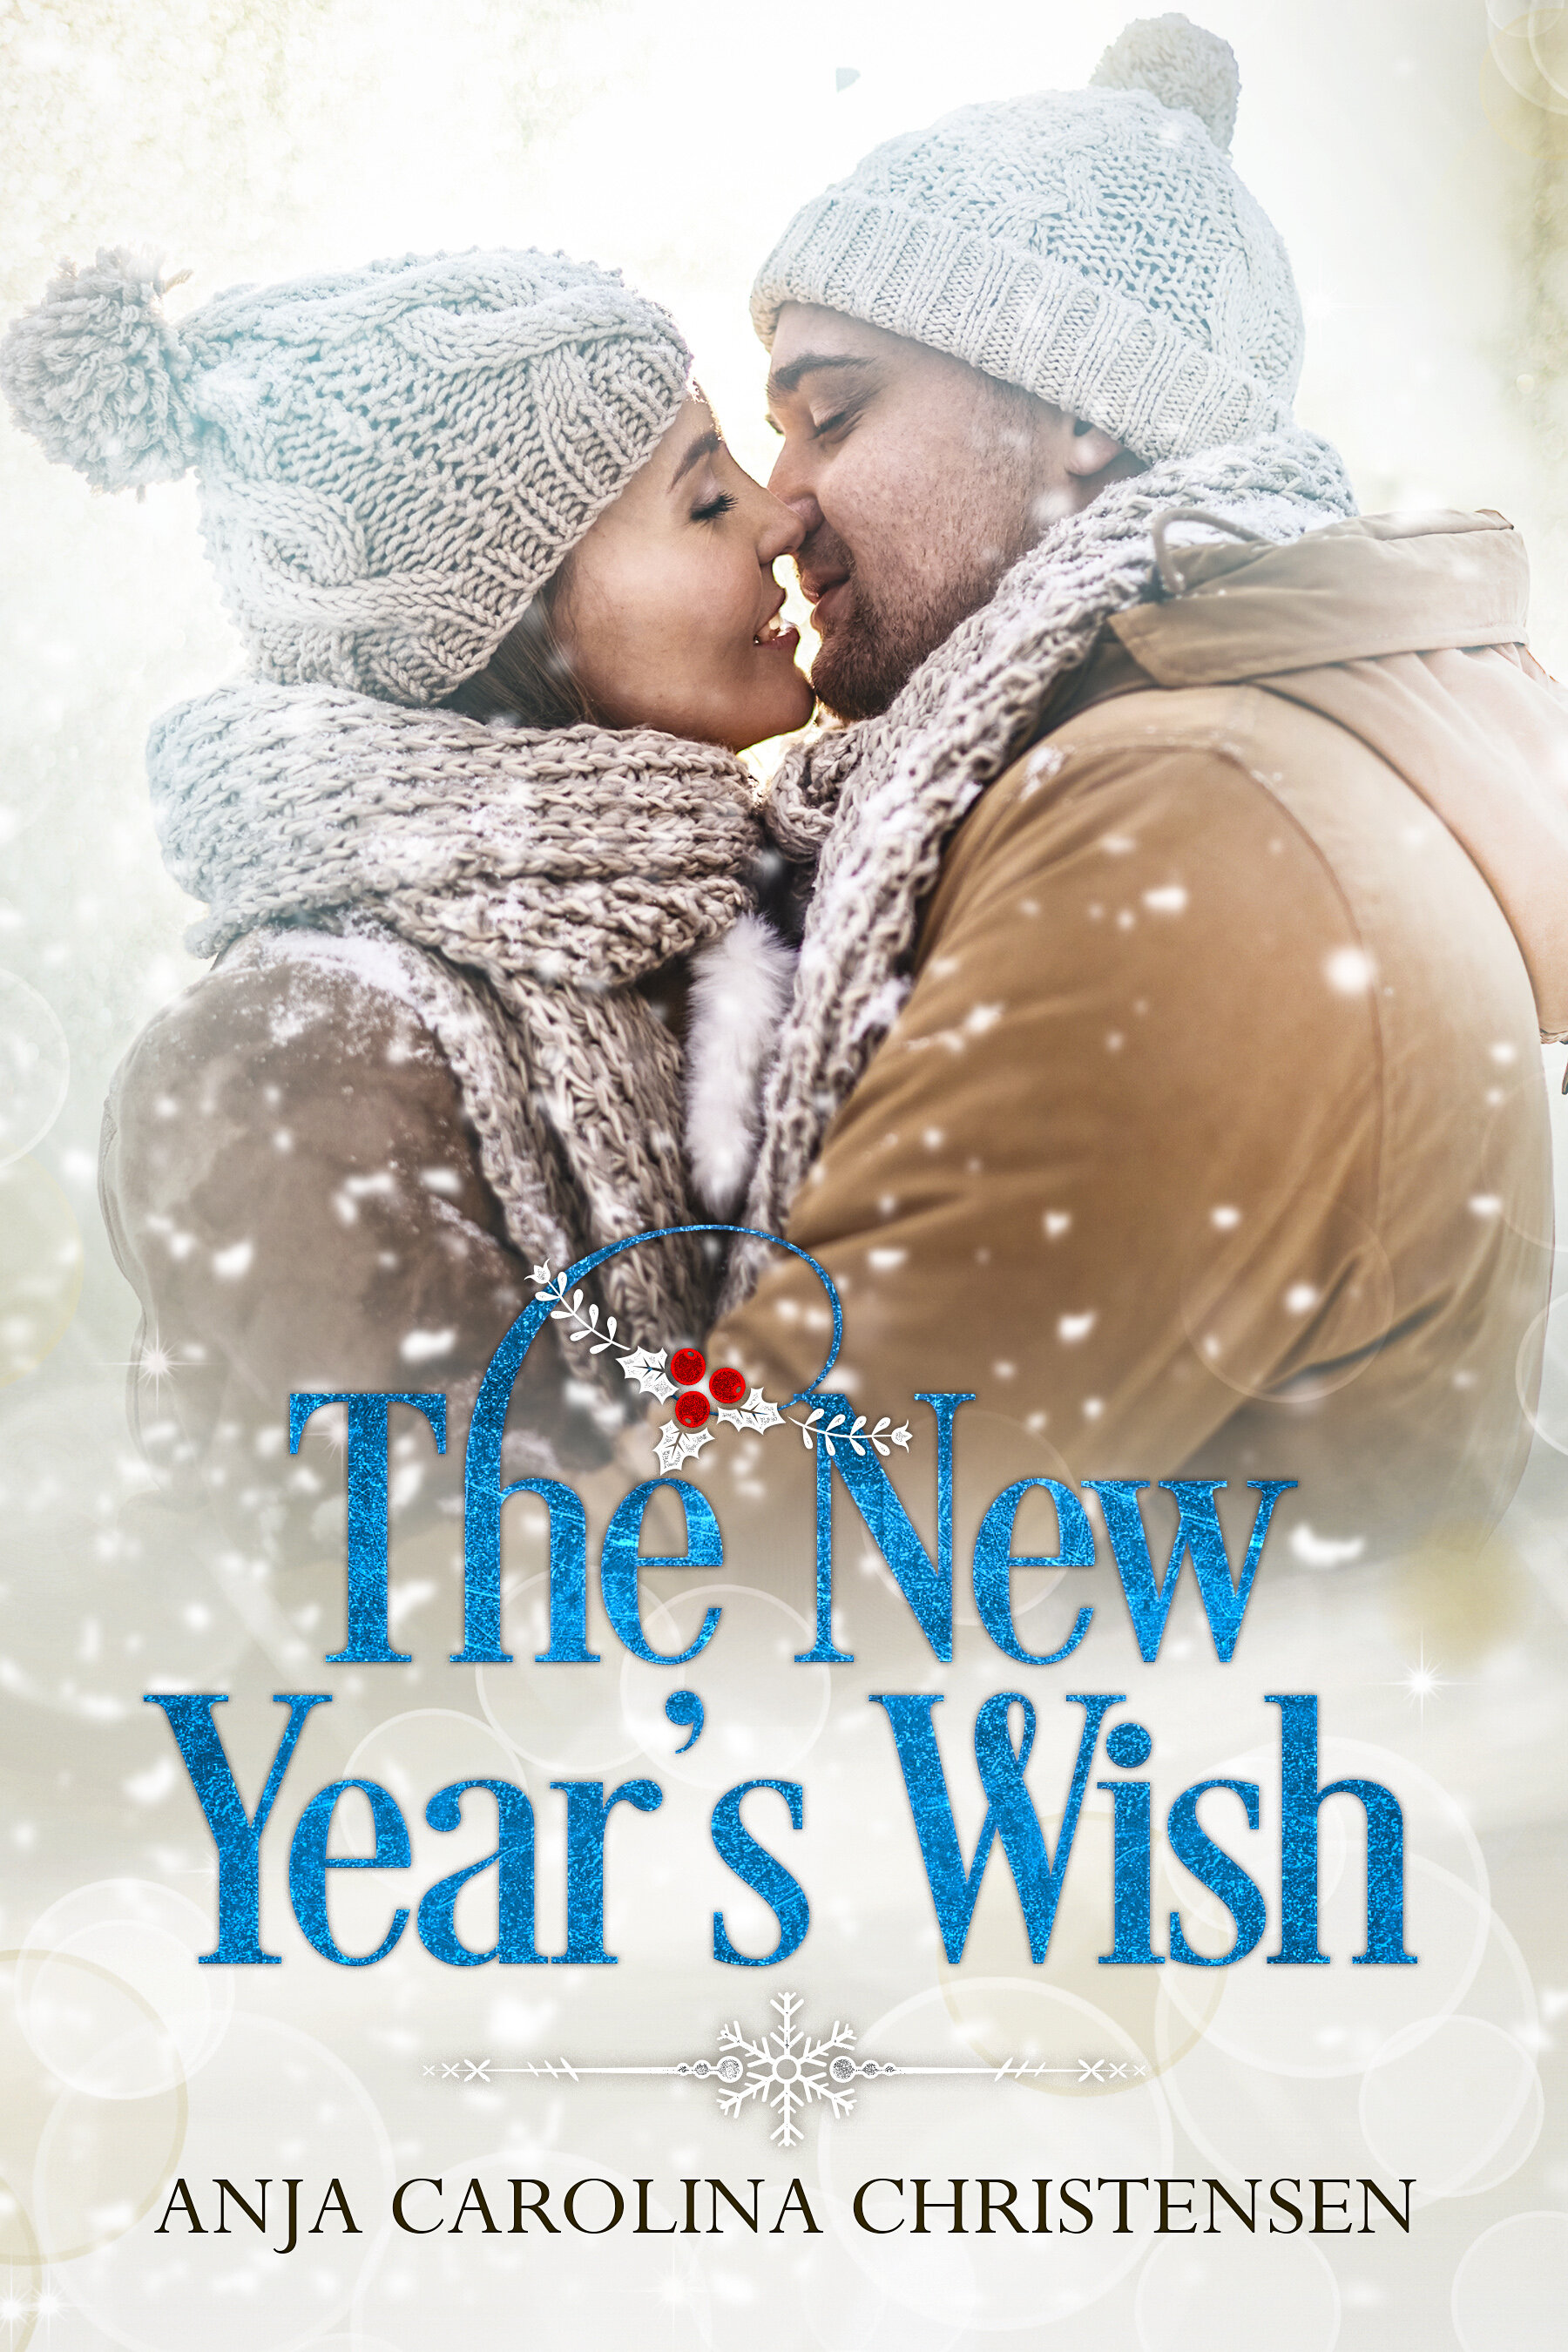 The New Year's Wish